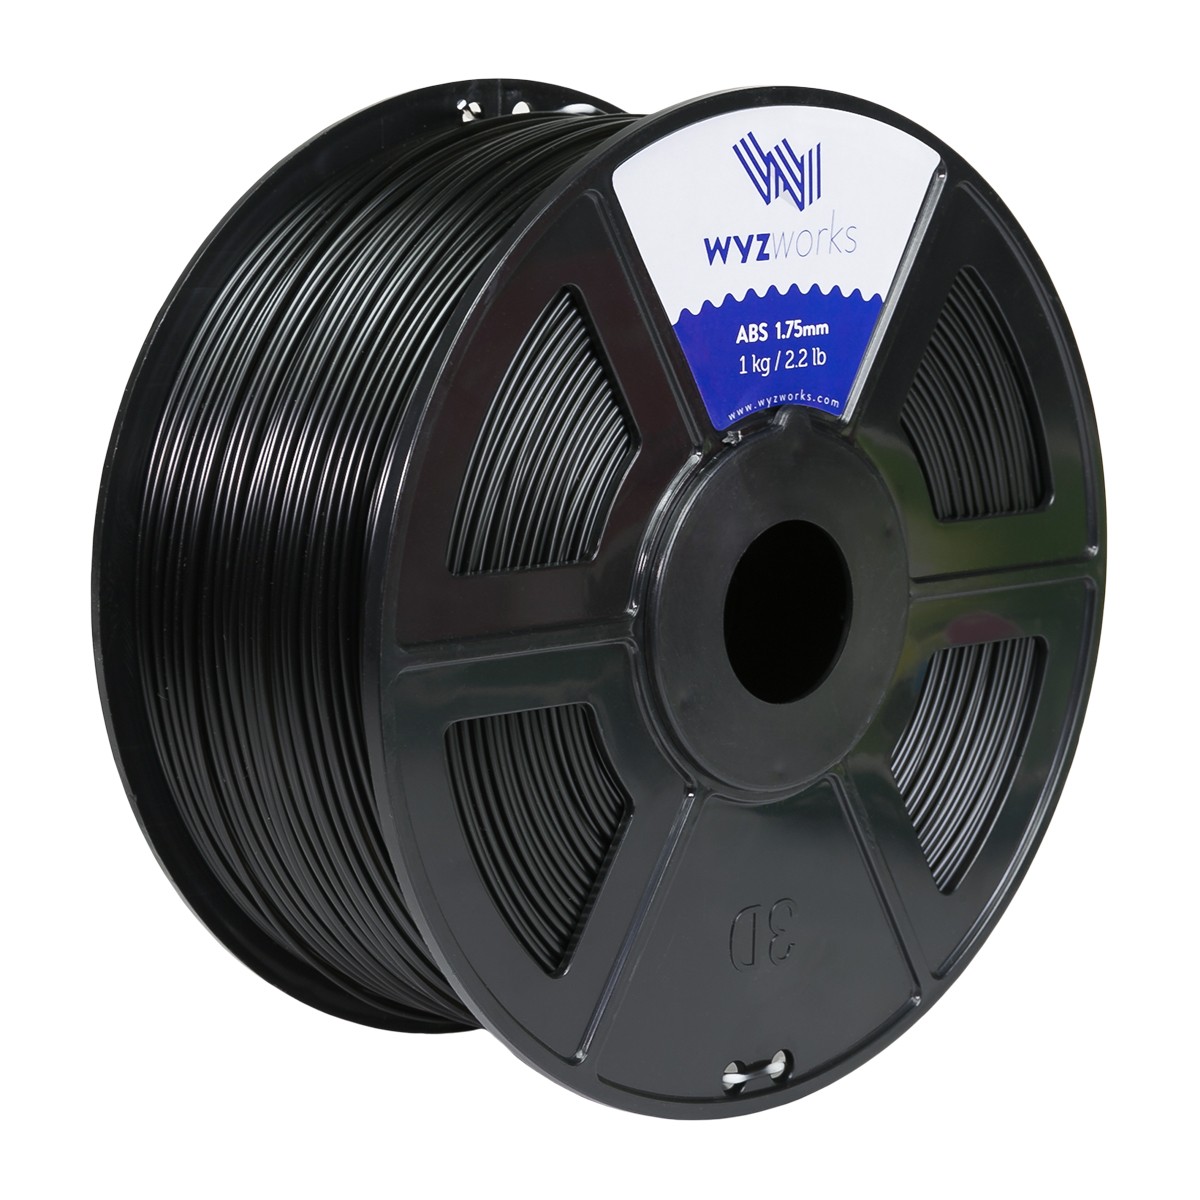 Translucent Black WYZwork 3D Printer Premium PLA Filament 1.75mm 1kg/2.2lb 